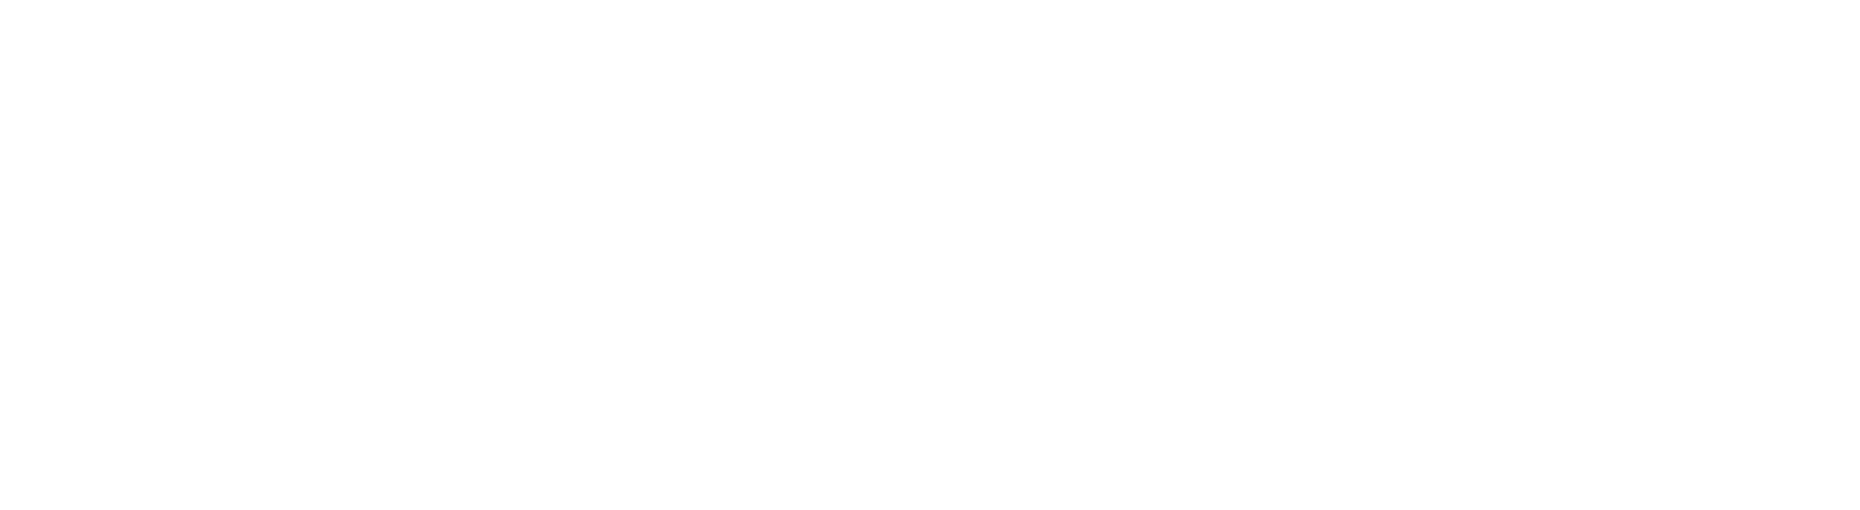 American Horror Story Installment 7 Show Logo